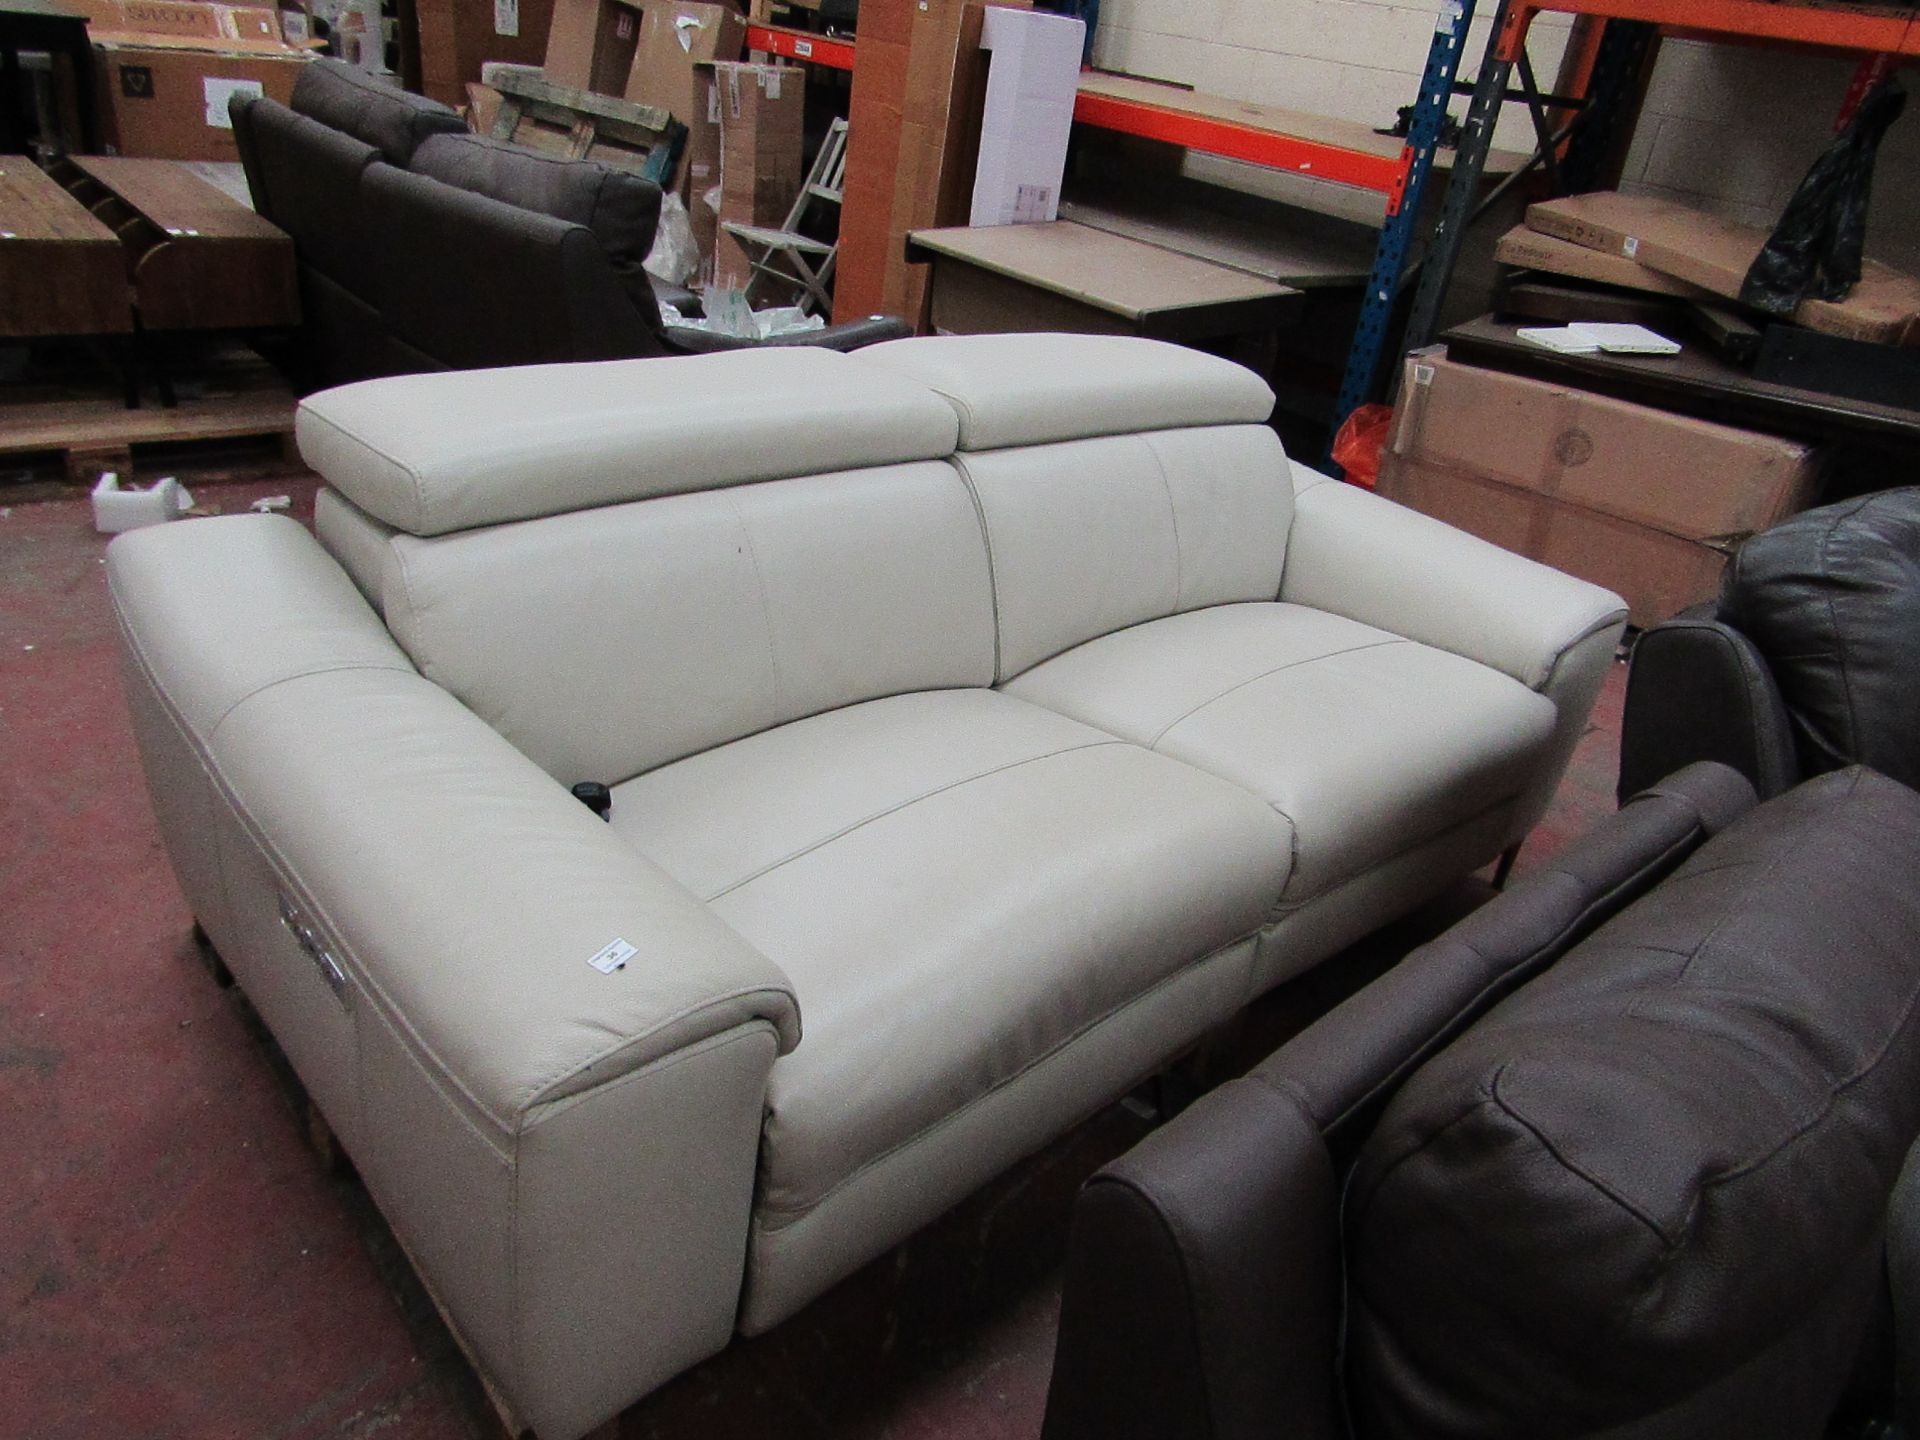 Nicoletti cream leather power recliner sofa, untested.